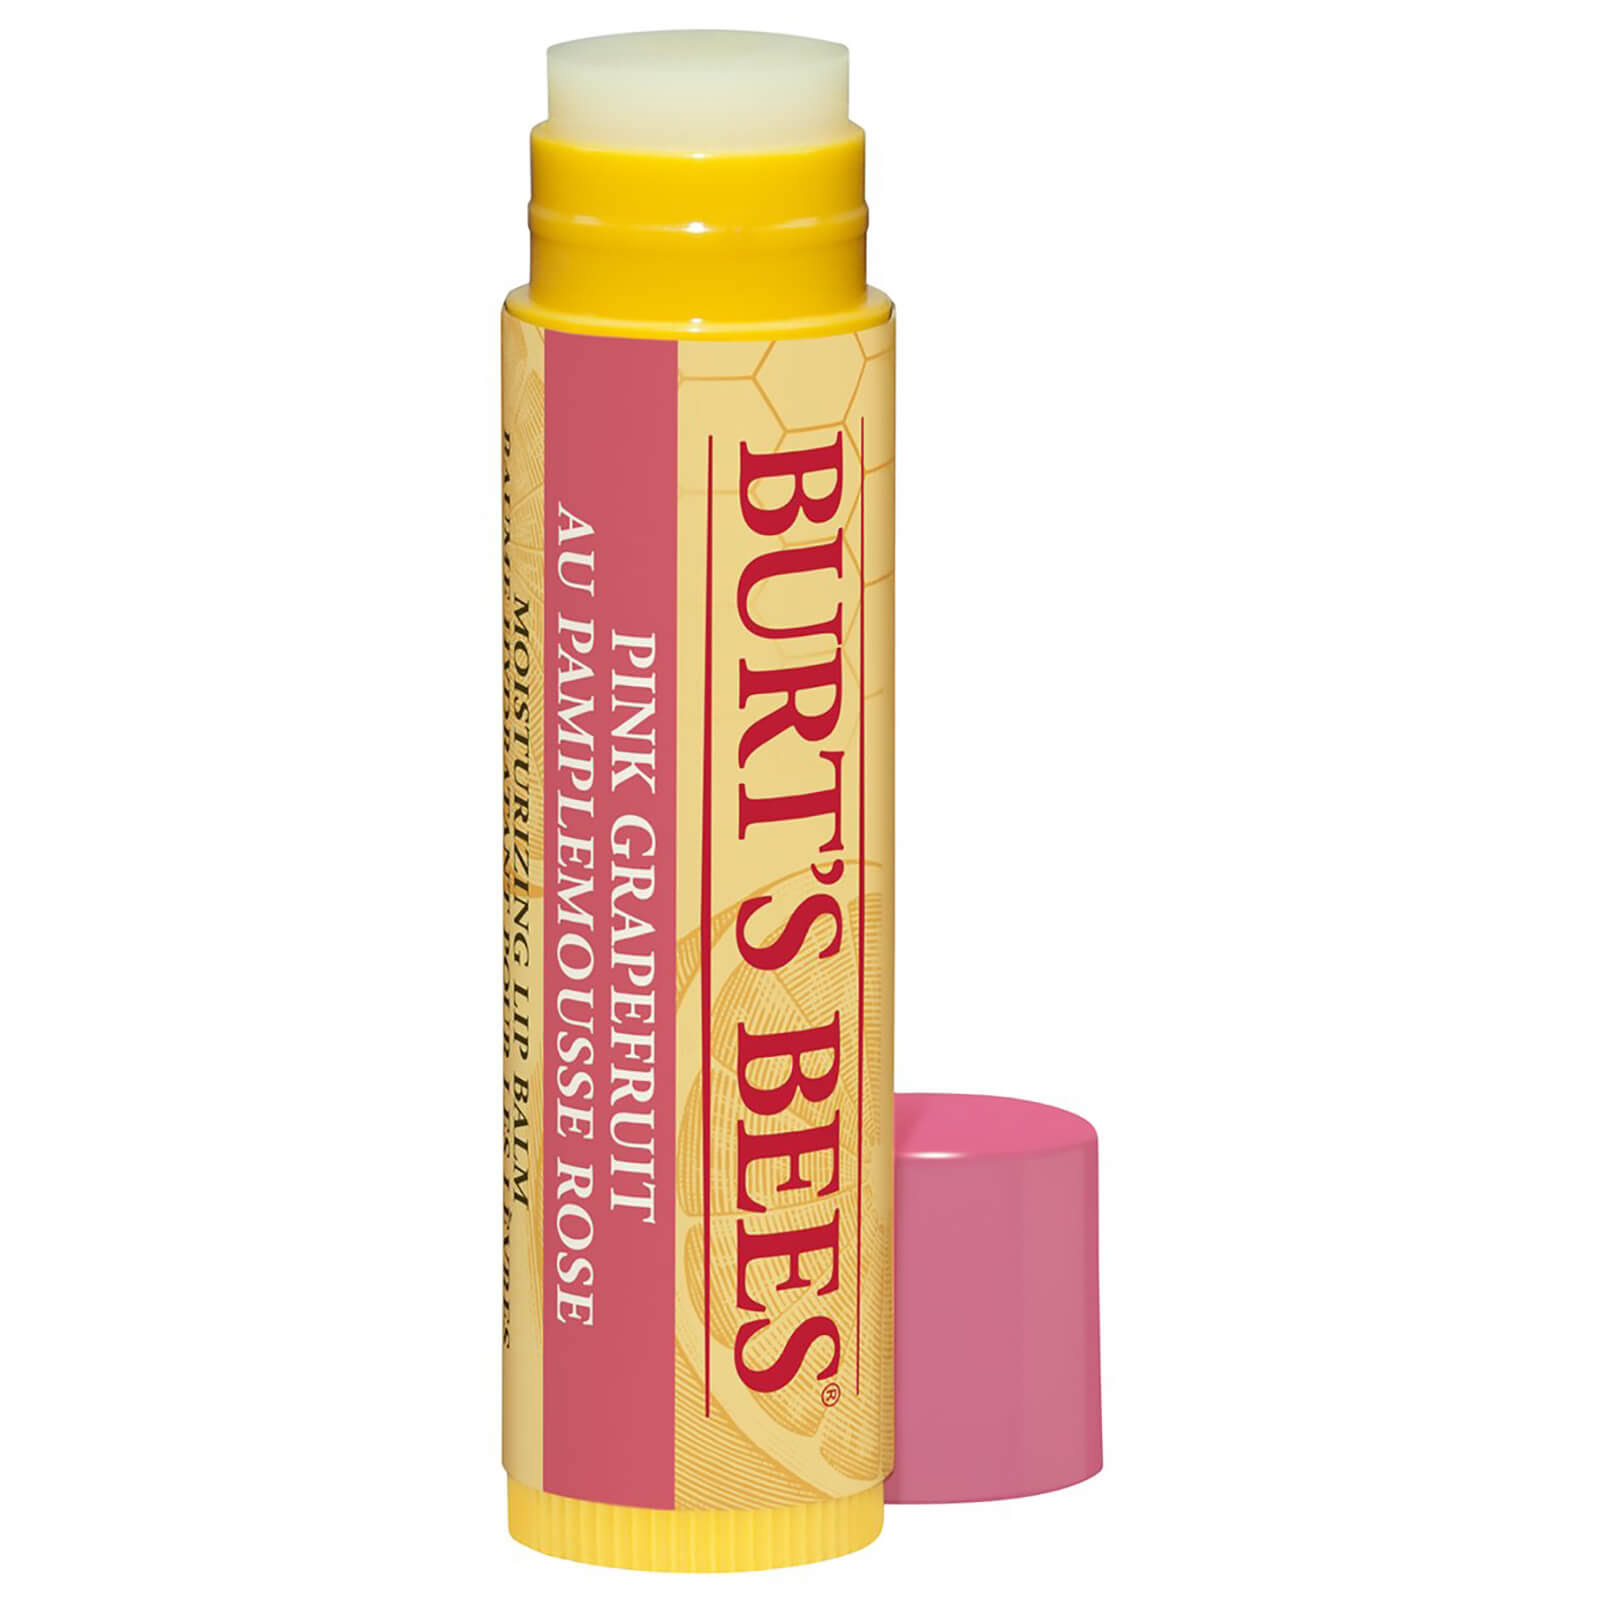 Burt's Bees Lip Balm - Pink Grapefruit, 4.25g